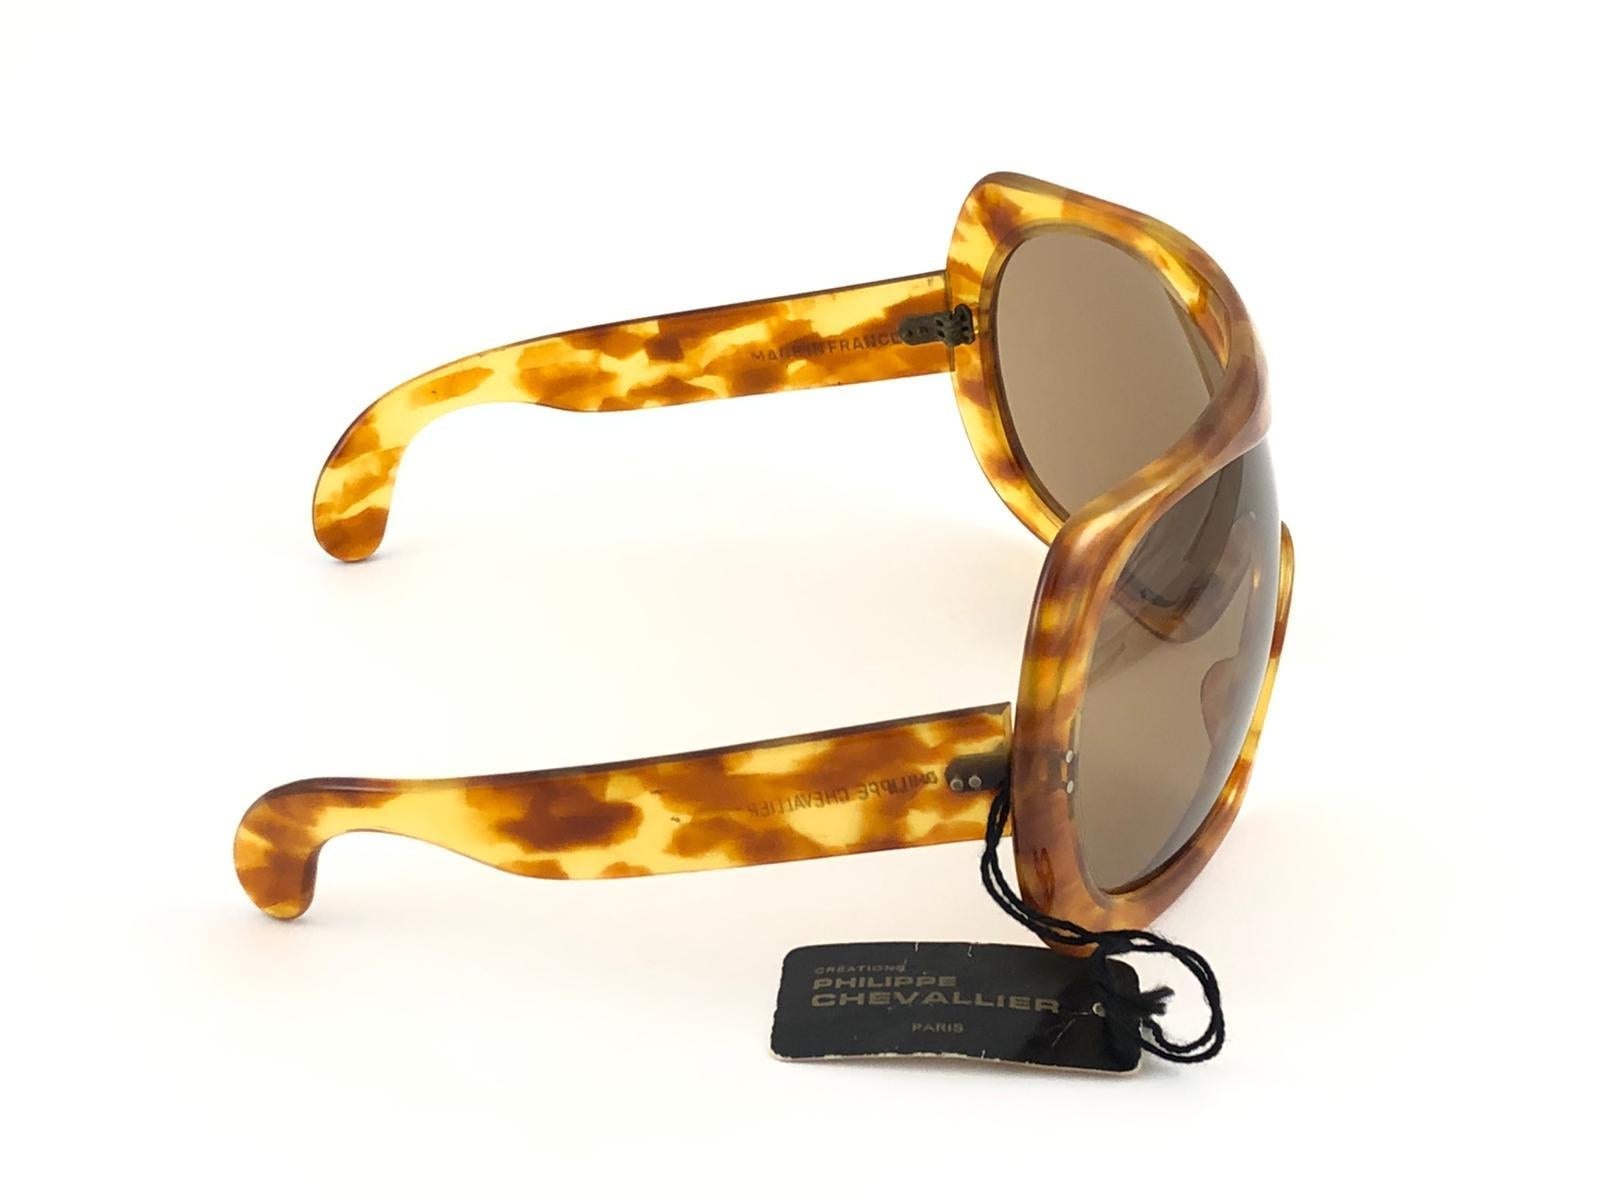 New Vintage Philippe Chevallier II Light Tortoise Miles Davis 1960 Sunglasses For Sale 2